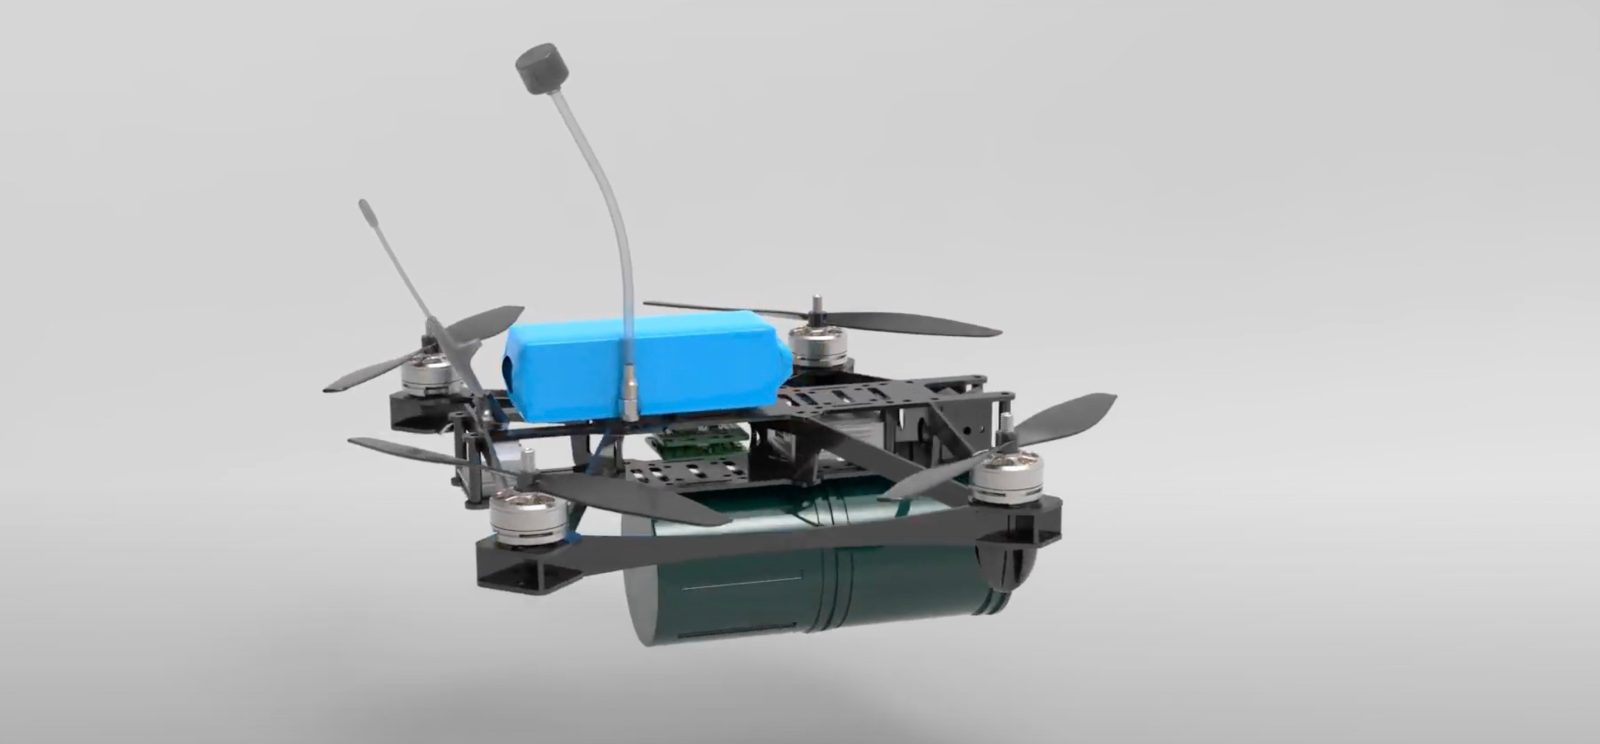 Pentagon Replicator drone